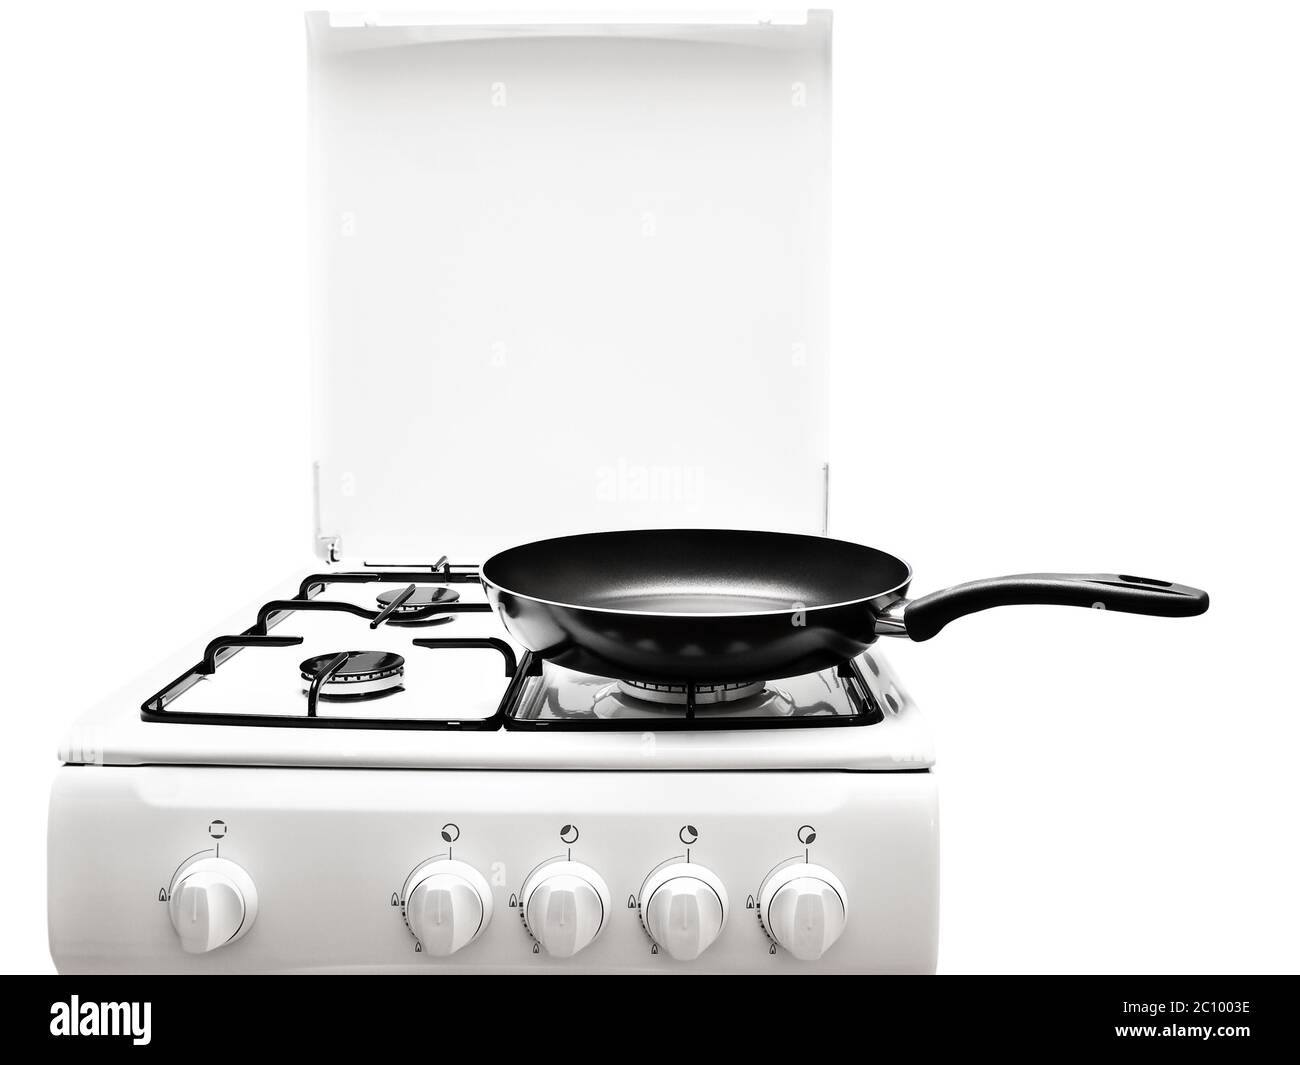 https://c8.alamy.com/comp/2C1003E/frying-pan-at-the-white-gas-stove-2C1003E.jpg